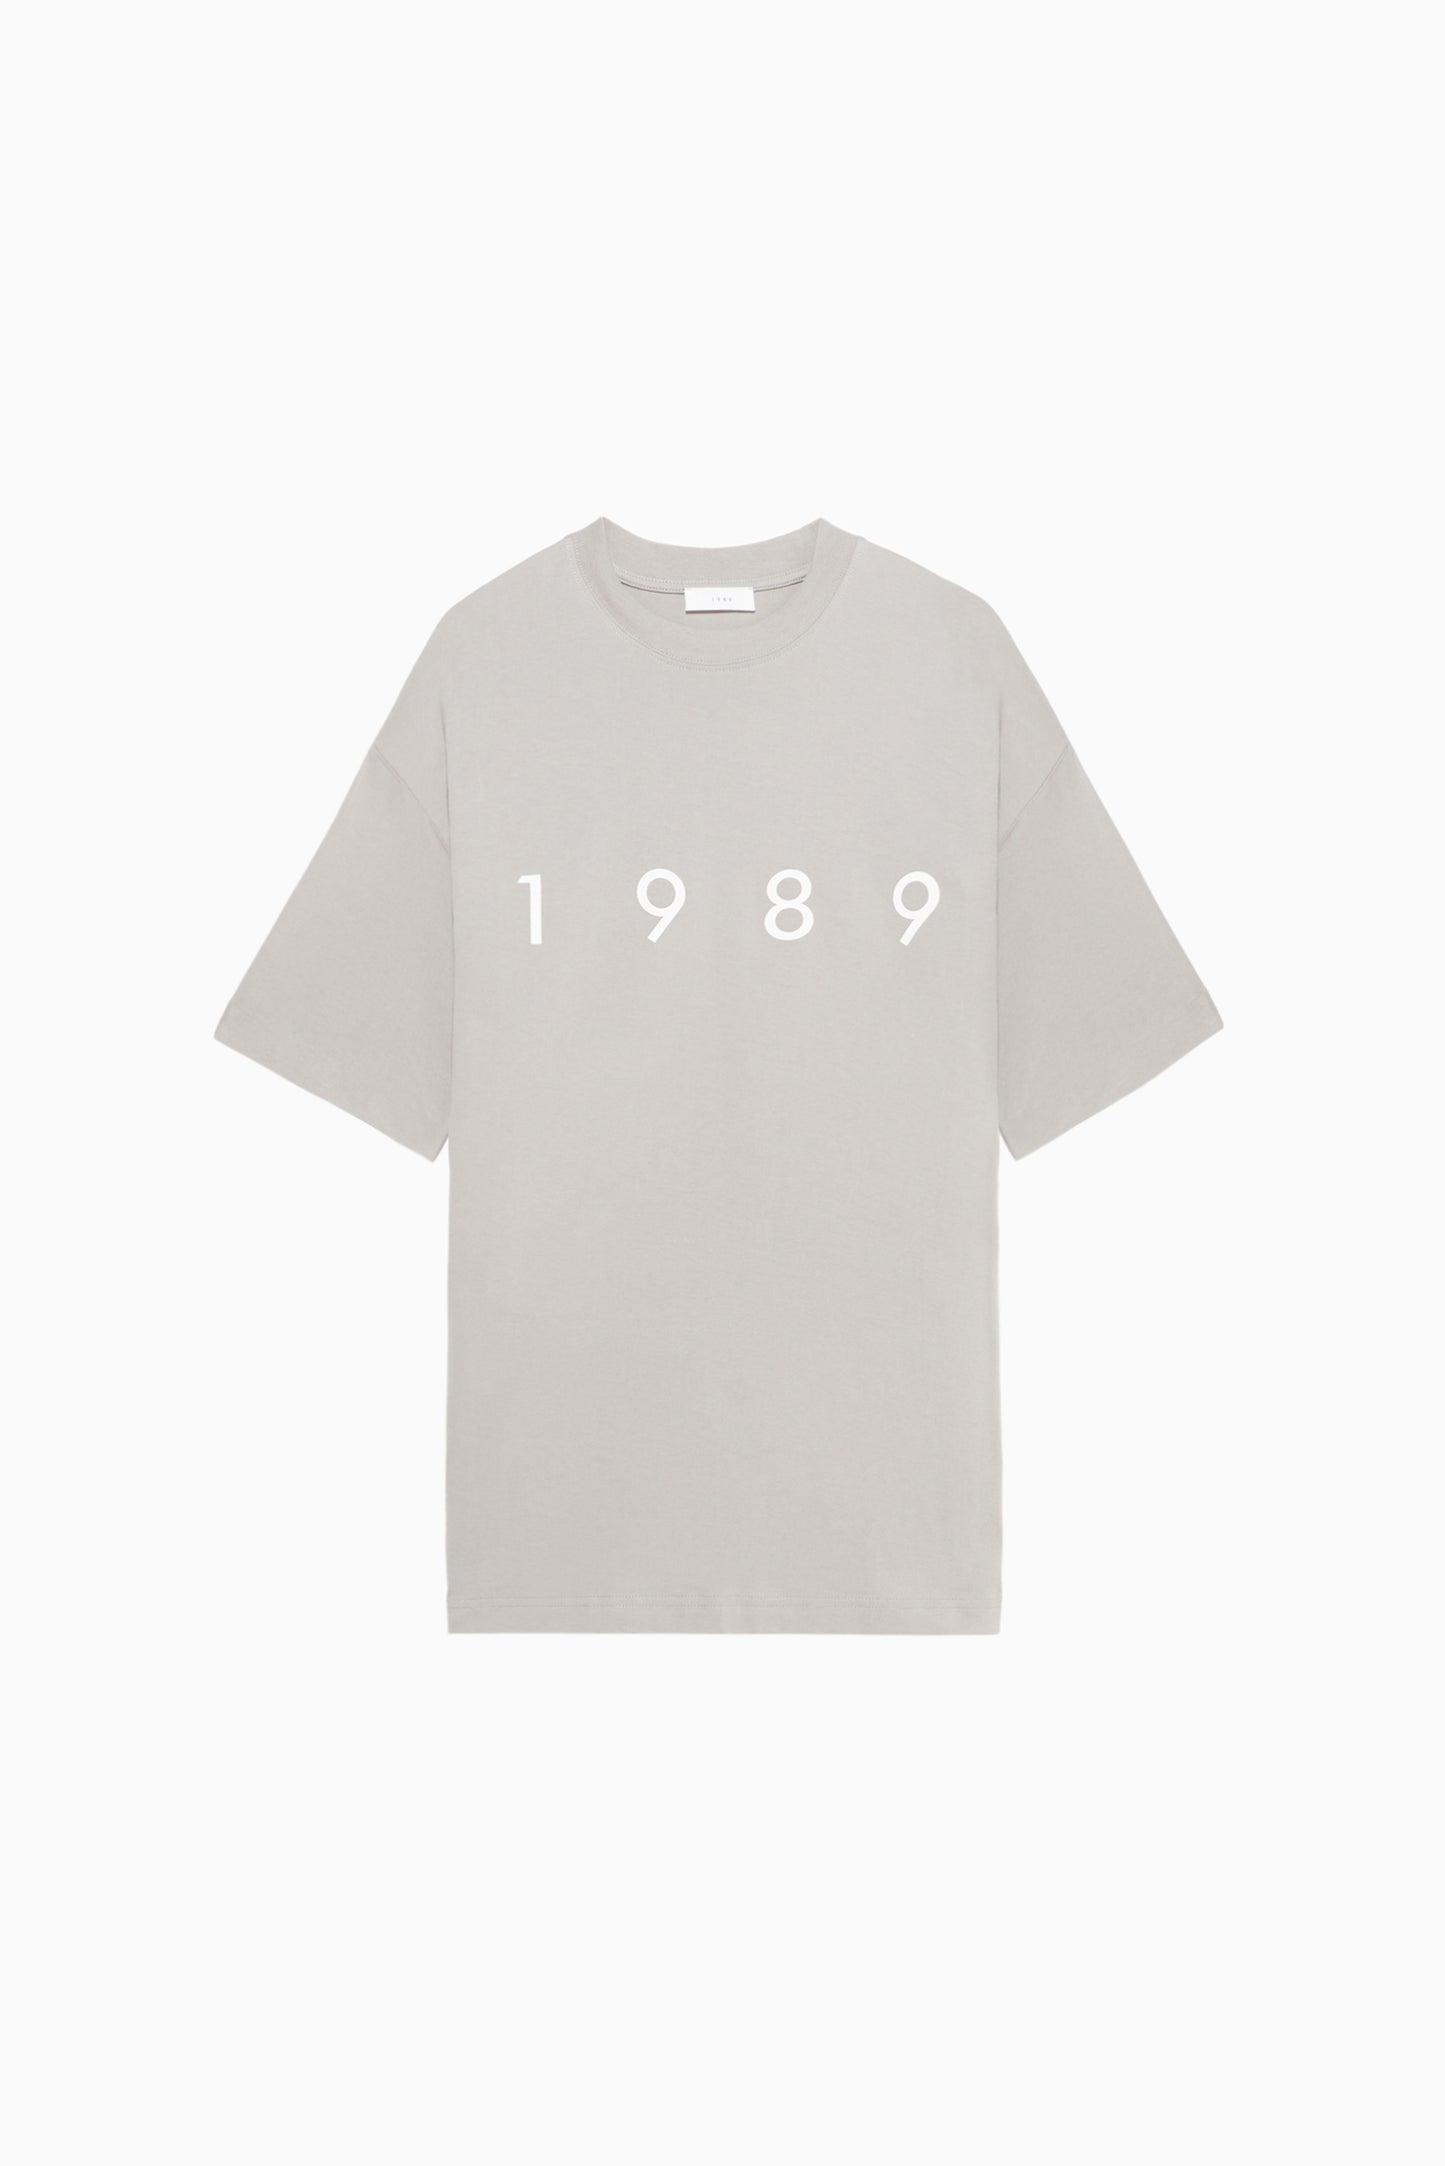 Man's 1989 Logo T-Shirt